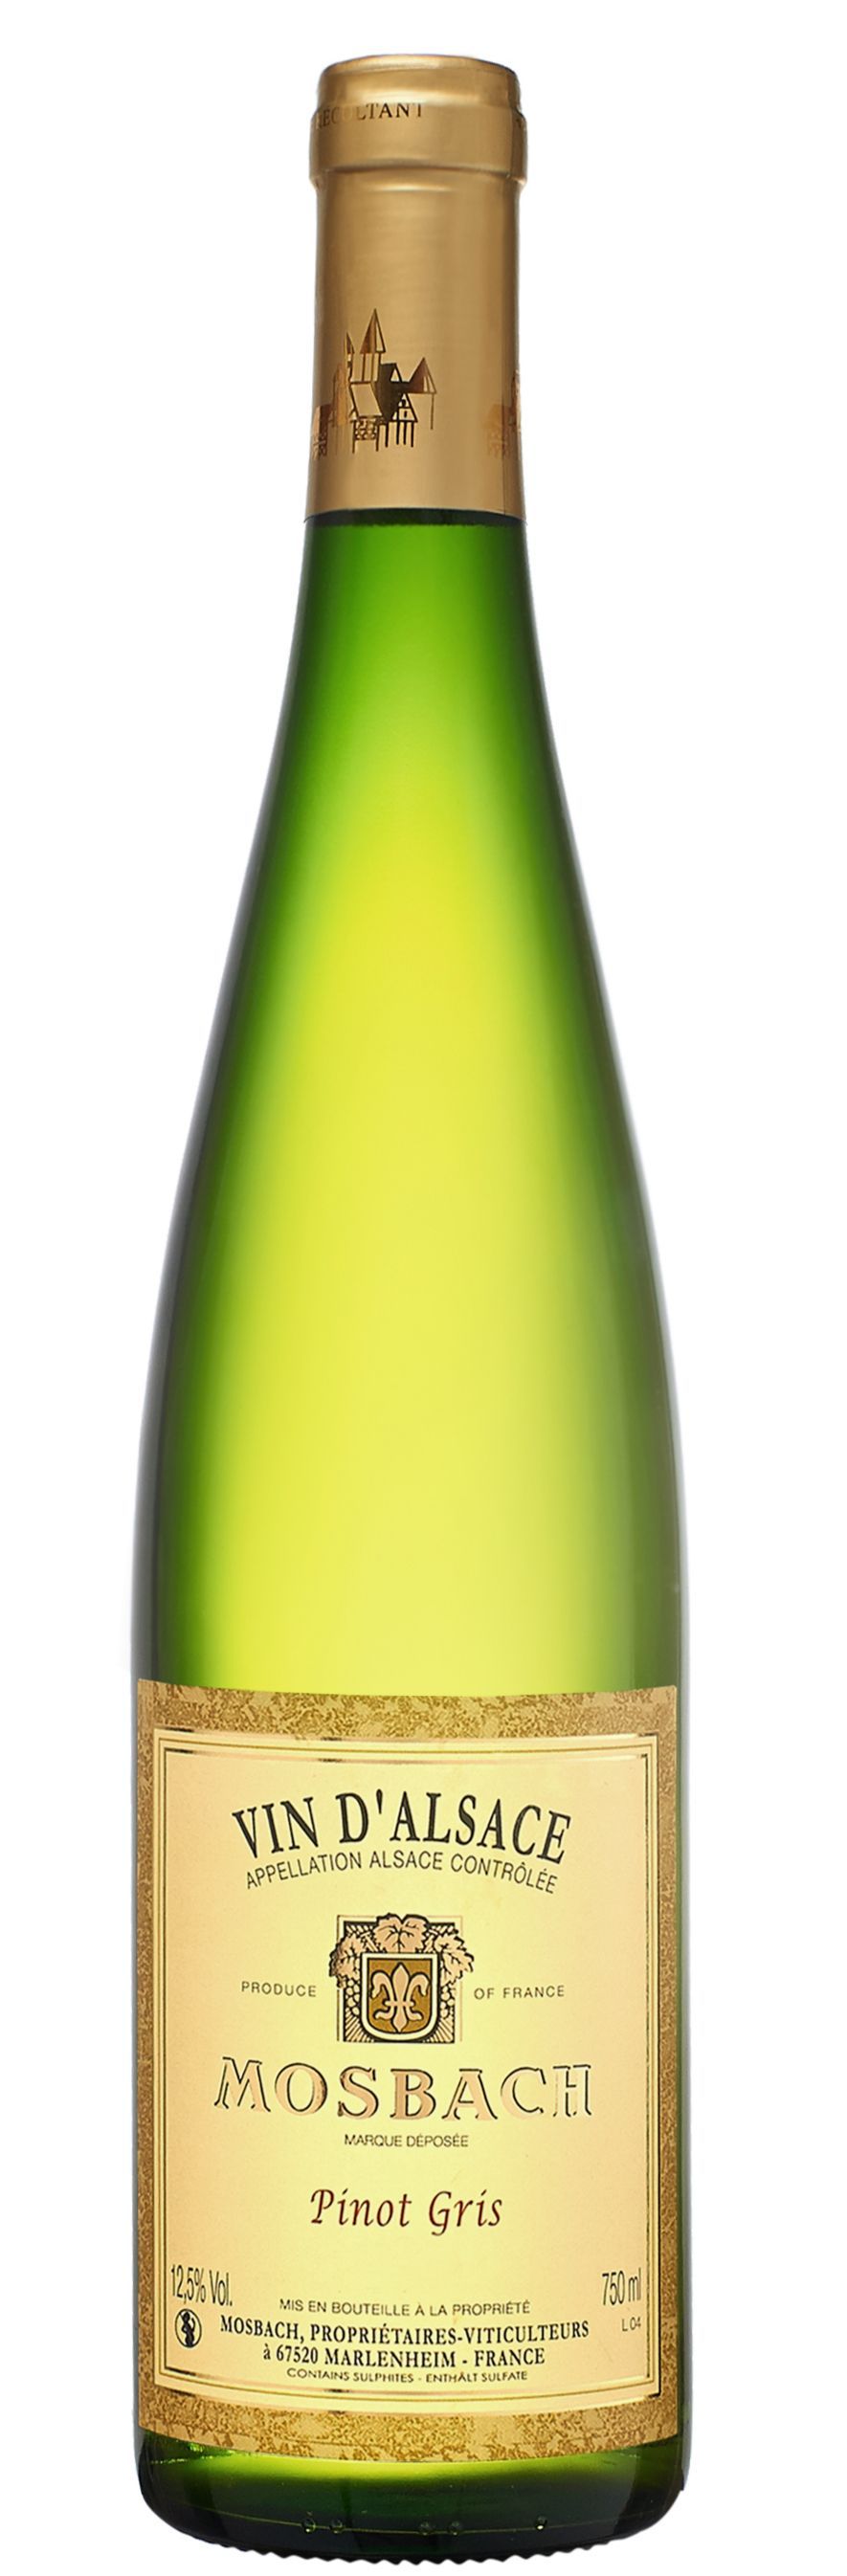 GFA MOSBACH (MARLENHEIM) Pinot Gris Mosbach, Weiß, 2020, Alsace ou Vin d'Alsace. Bottle image